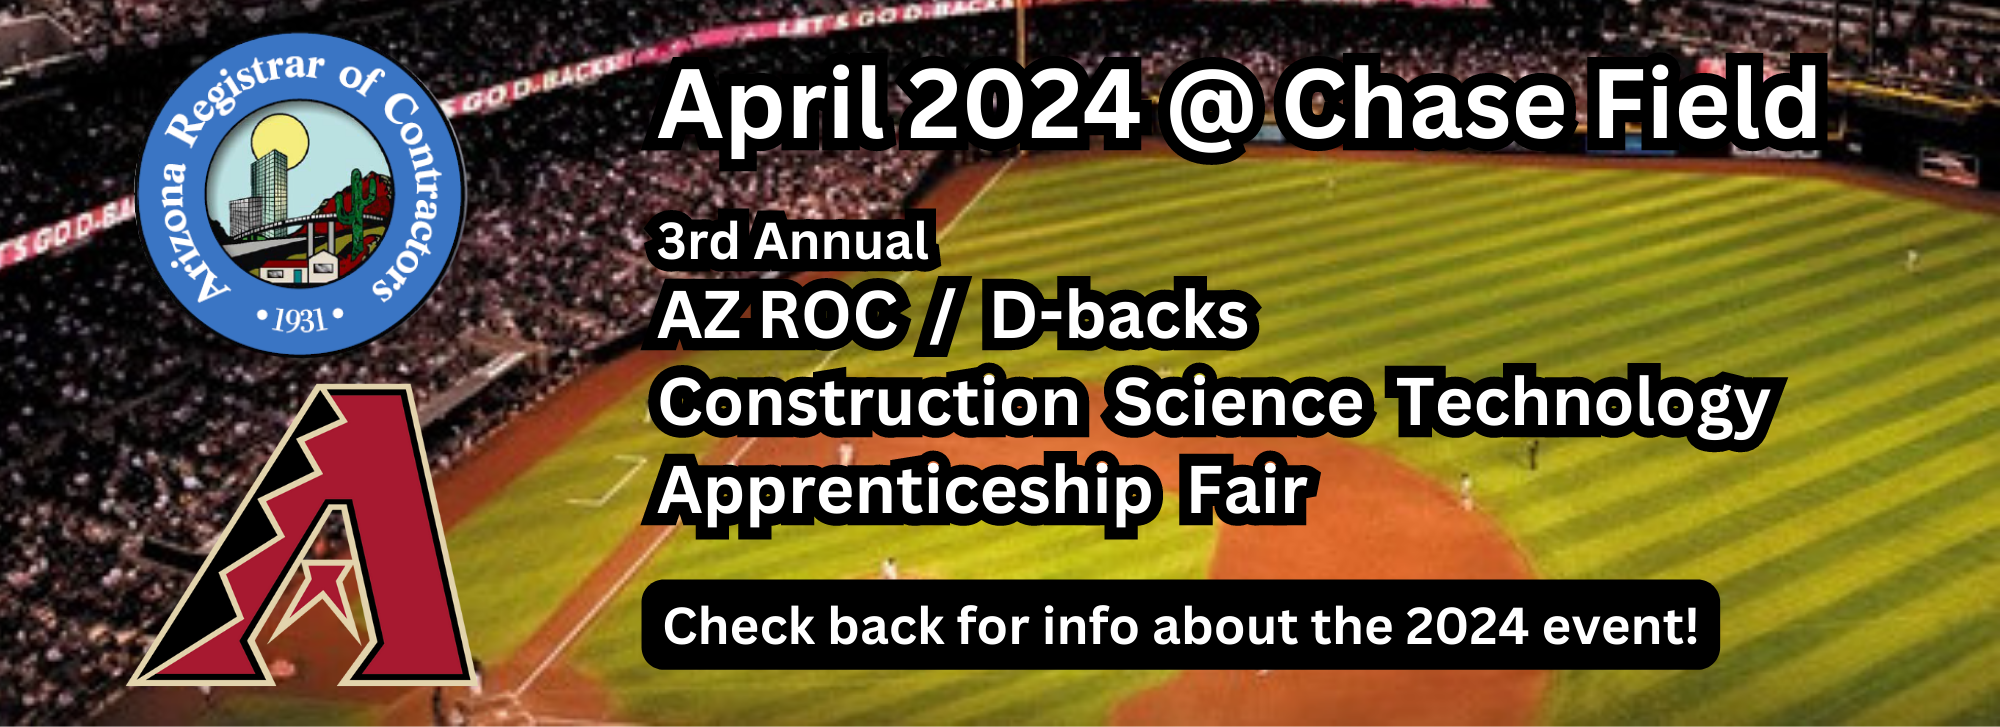 Annual AZ ROC / D-backs Construction Science Technology Apprenticeship Fair at Chase Field